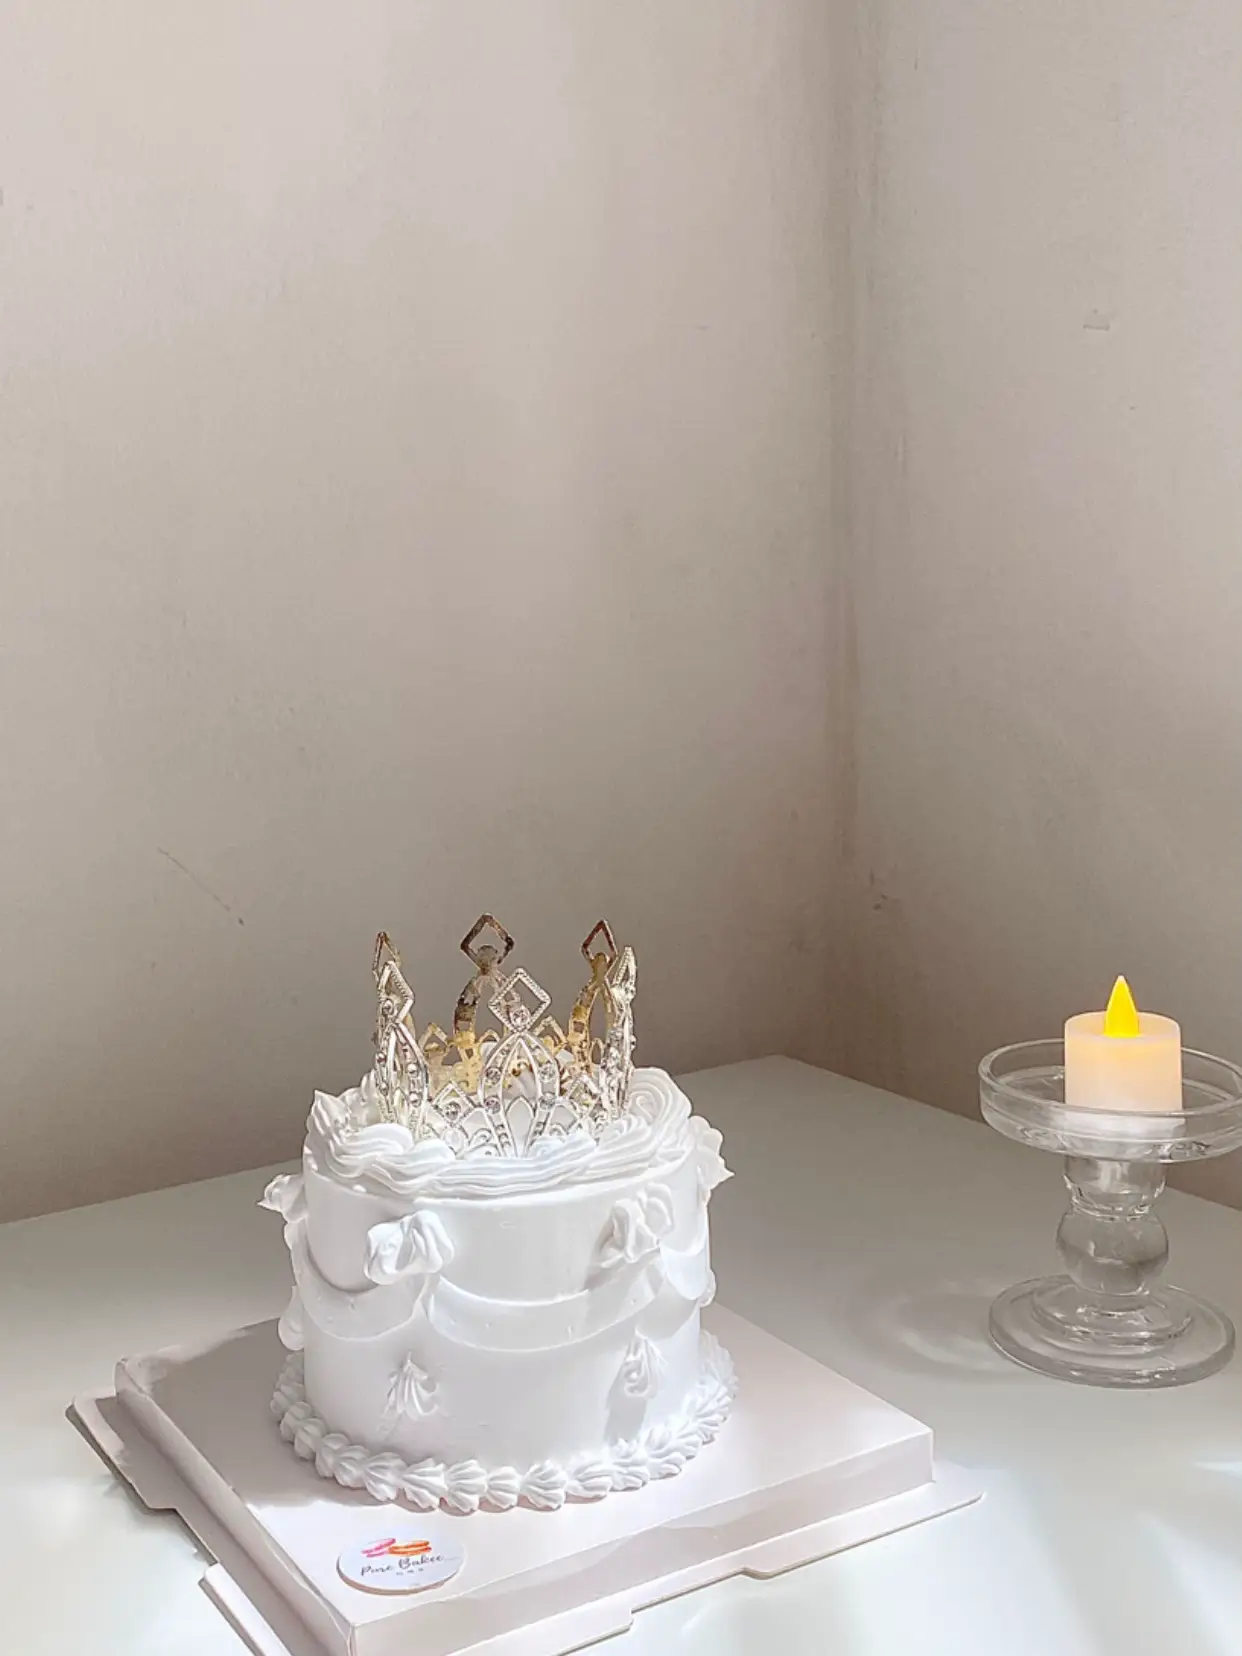 🇲🇾4inch bento cake, birthday cake, Gallery posted by xxsqxx